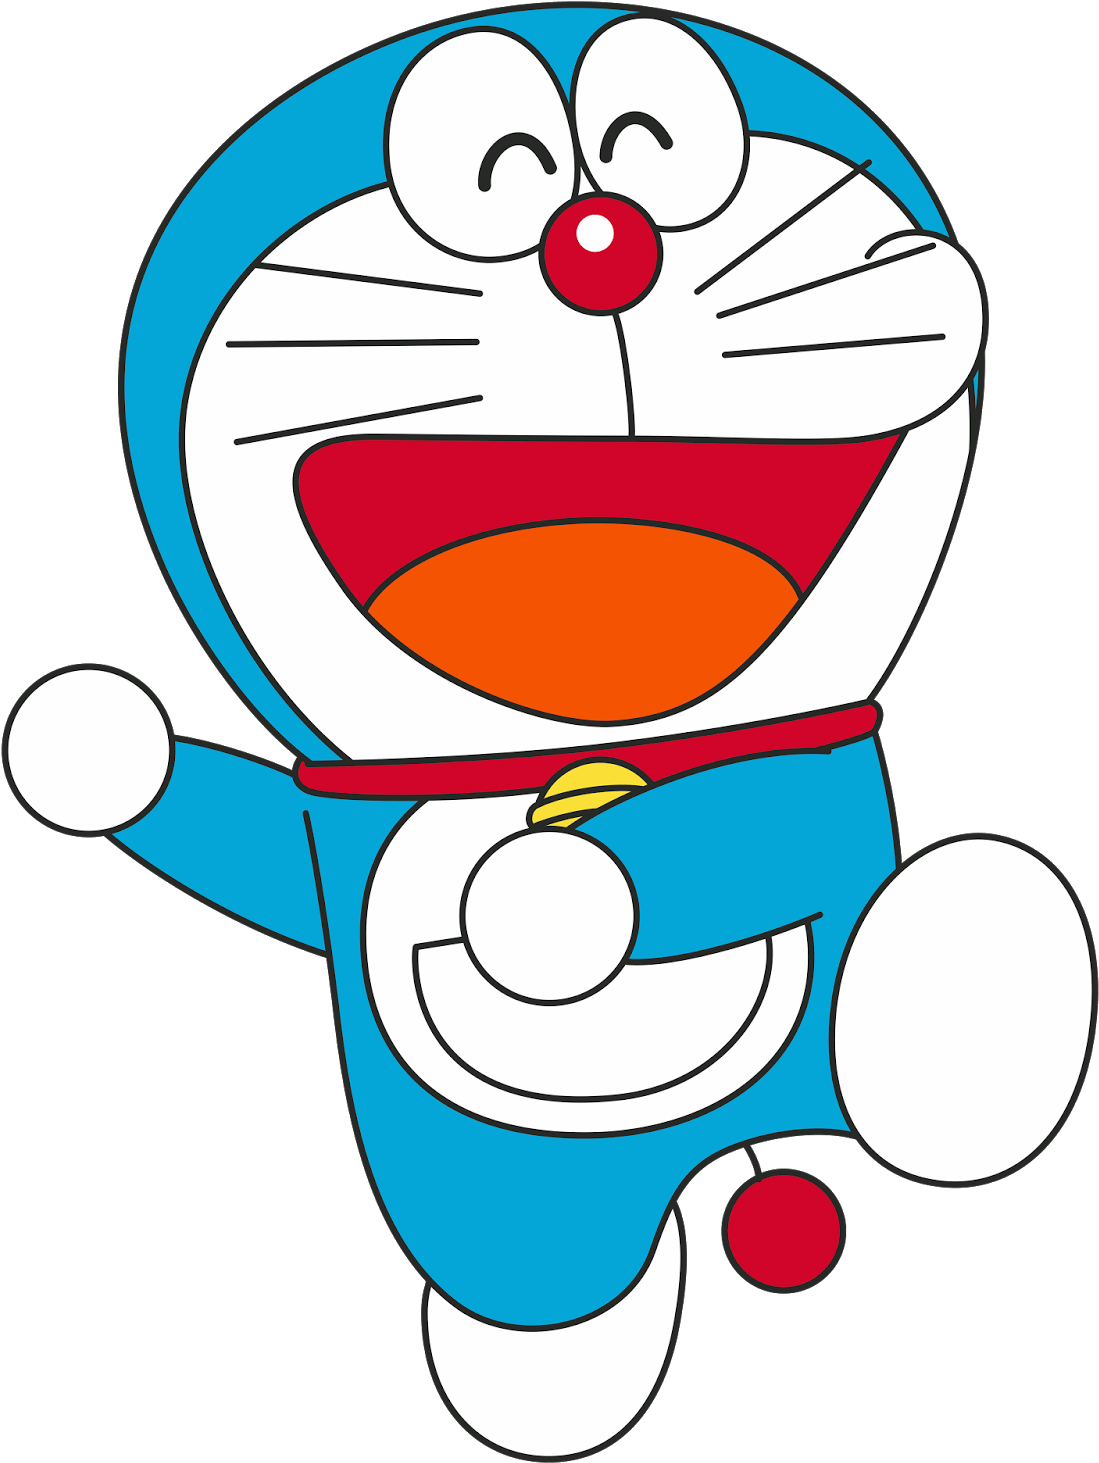 Download Doraemon On Clouds Cartoon IPhone Wallpaper | Wallpapers.com